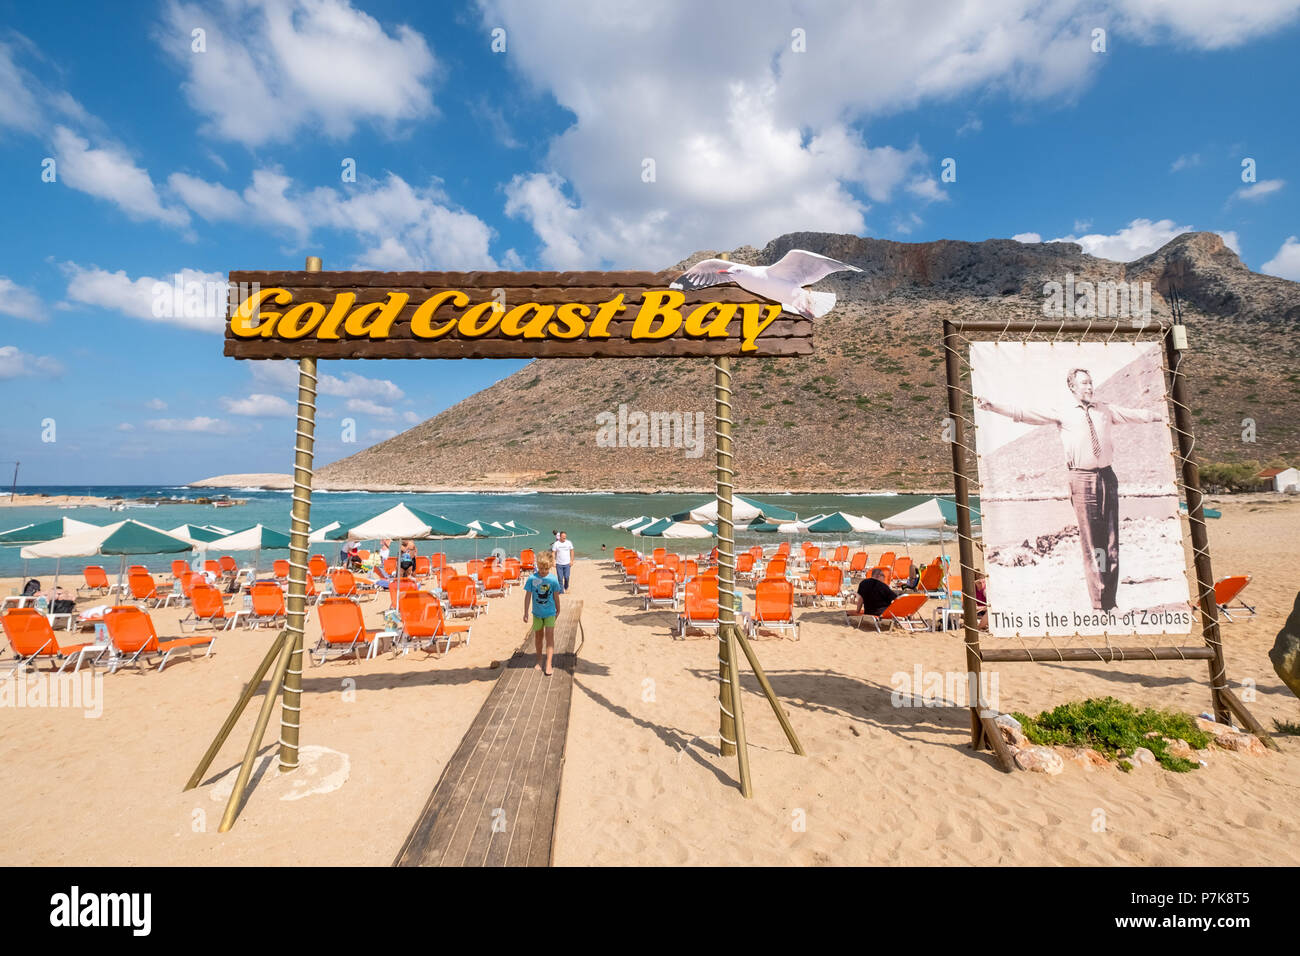 Stavros, Gold Coaster Bay, Zorbas Beach, movie set for the movie Alexis Zorbas, Akrotiri Peninsula, Dream Beach, Chania, Crete, Greece, Europe, Greece Stock Photo